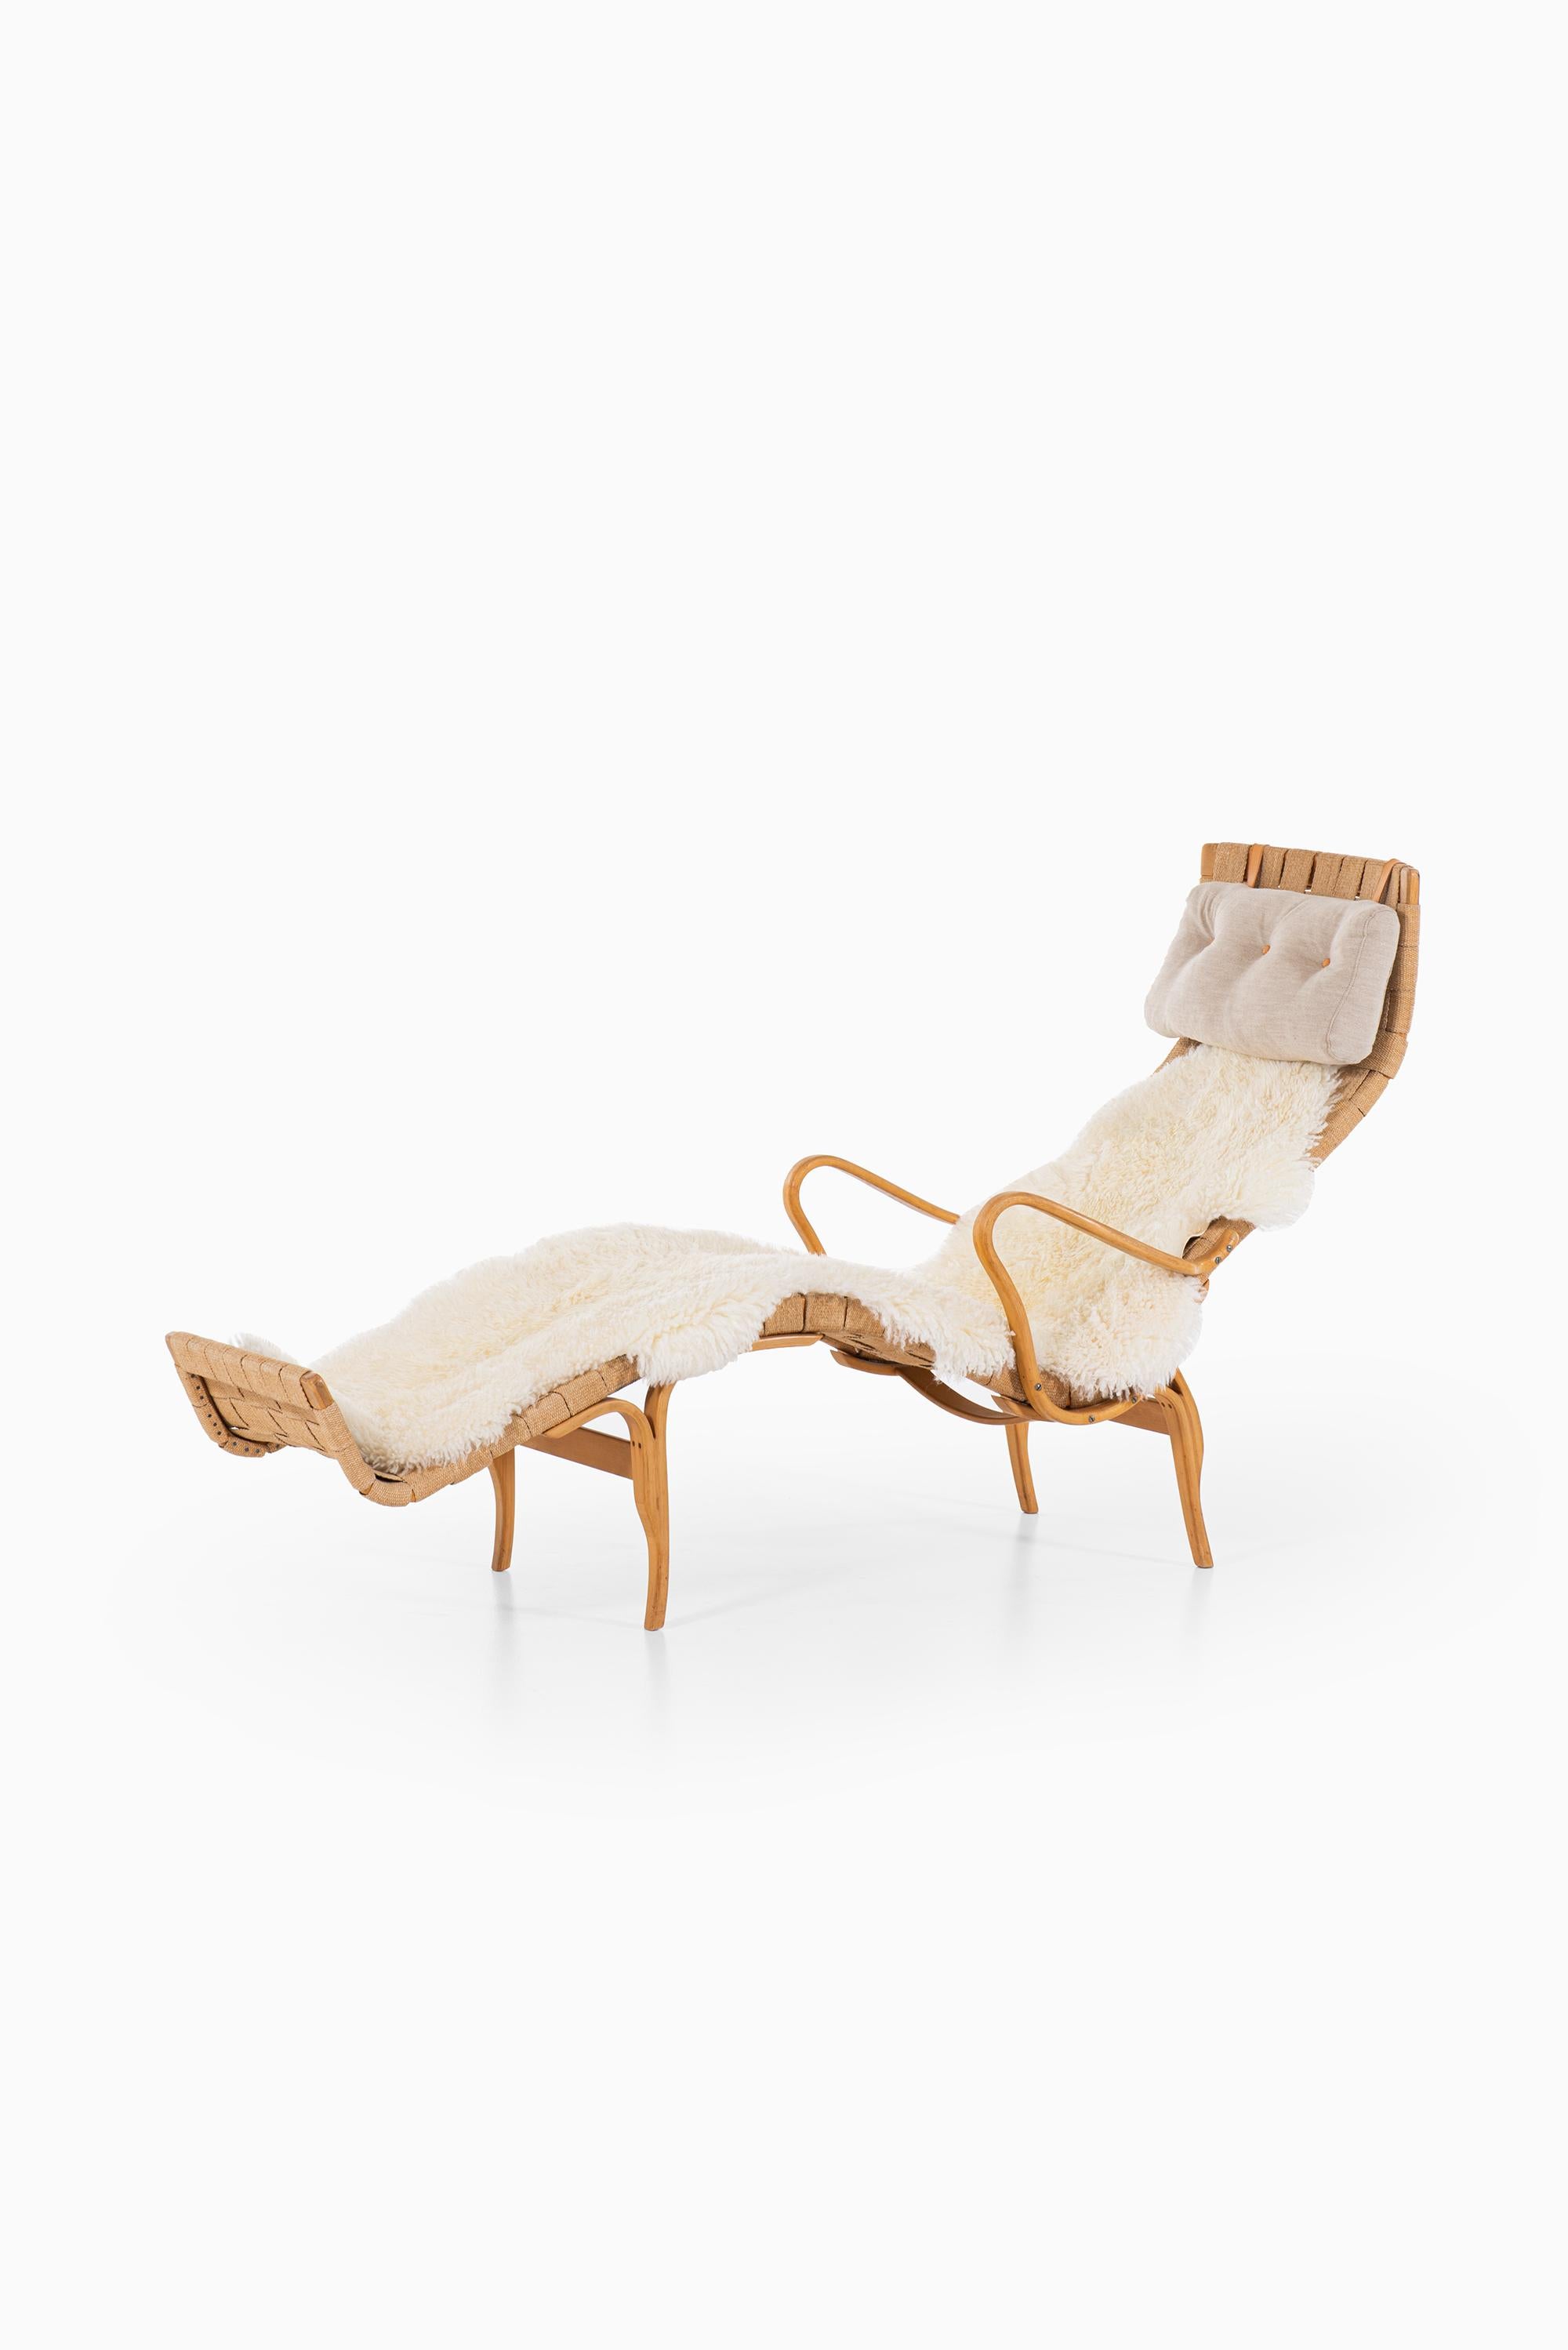 Lounge chair model Pernilla 3 / T-108 designed by Bruno Mathsson. Produced by Karl Mathsson in Värnamo, Sweden.